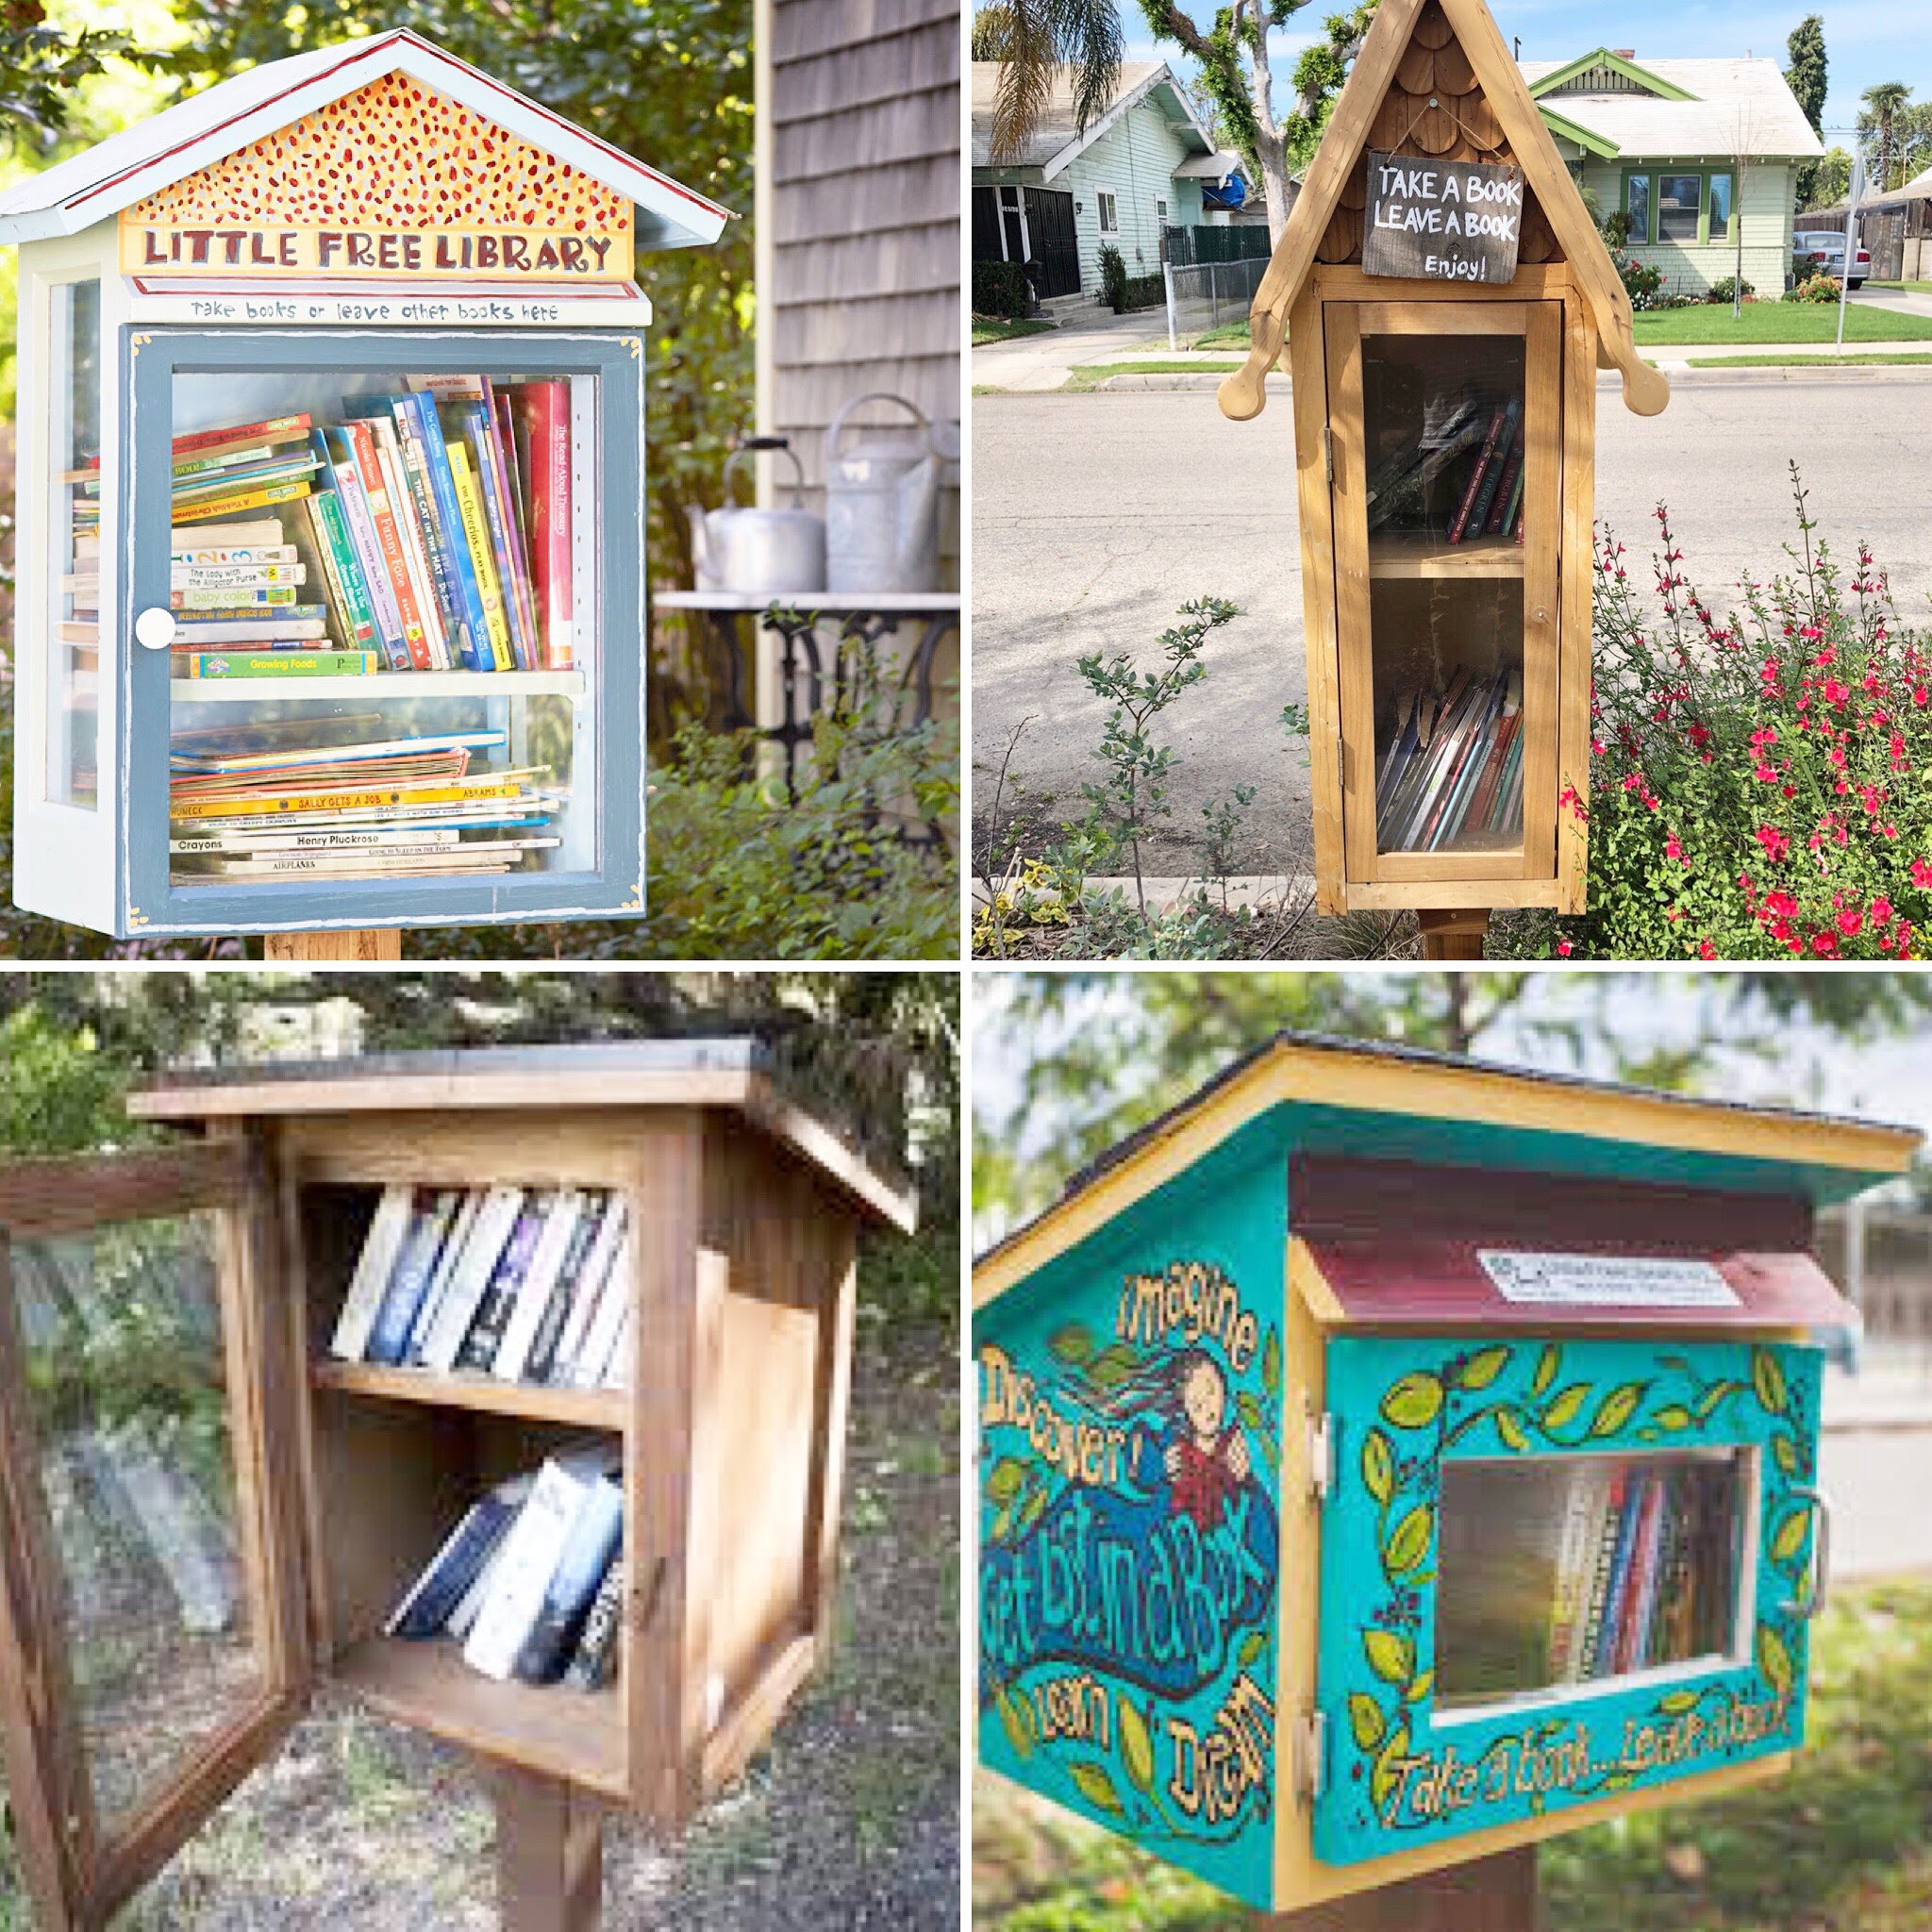 enp-s-little-free-library-initiative-every-neighborhood-partnership